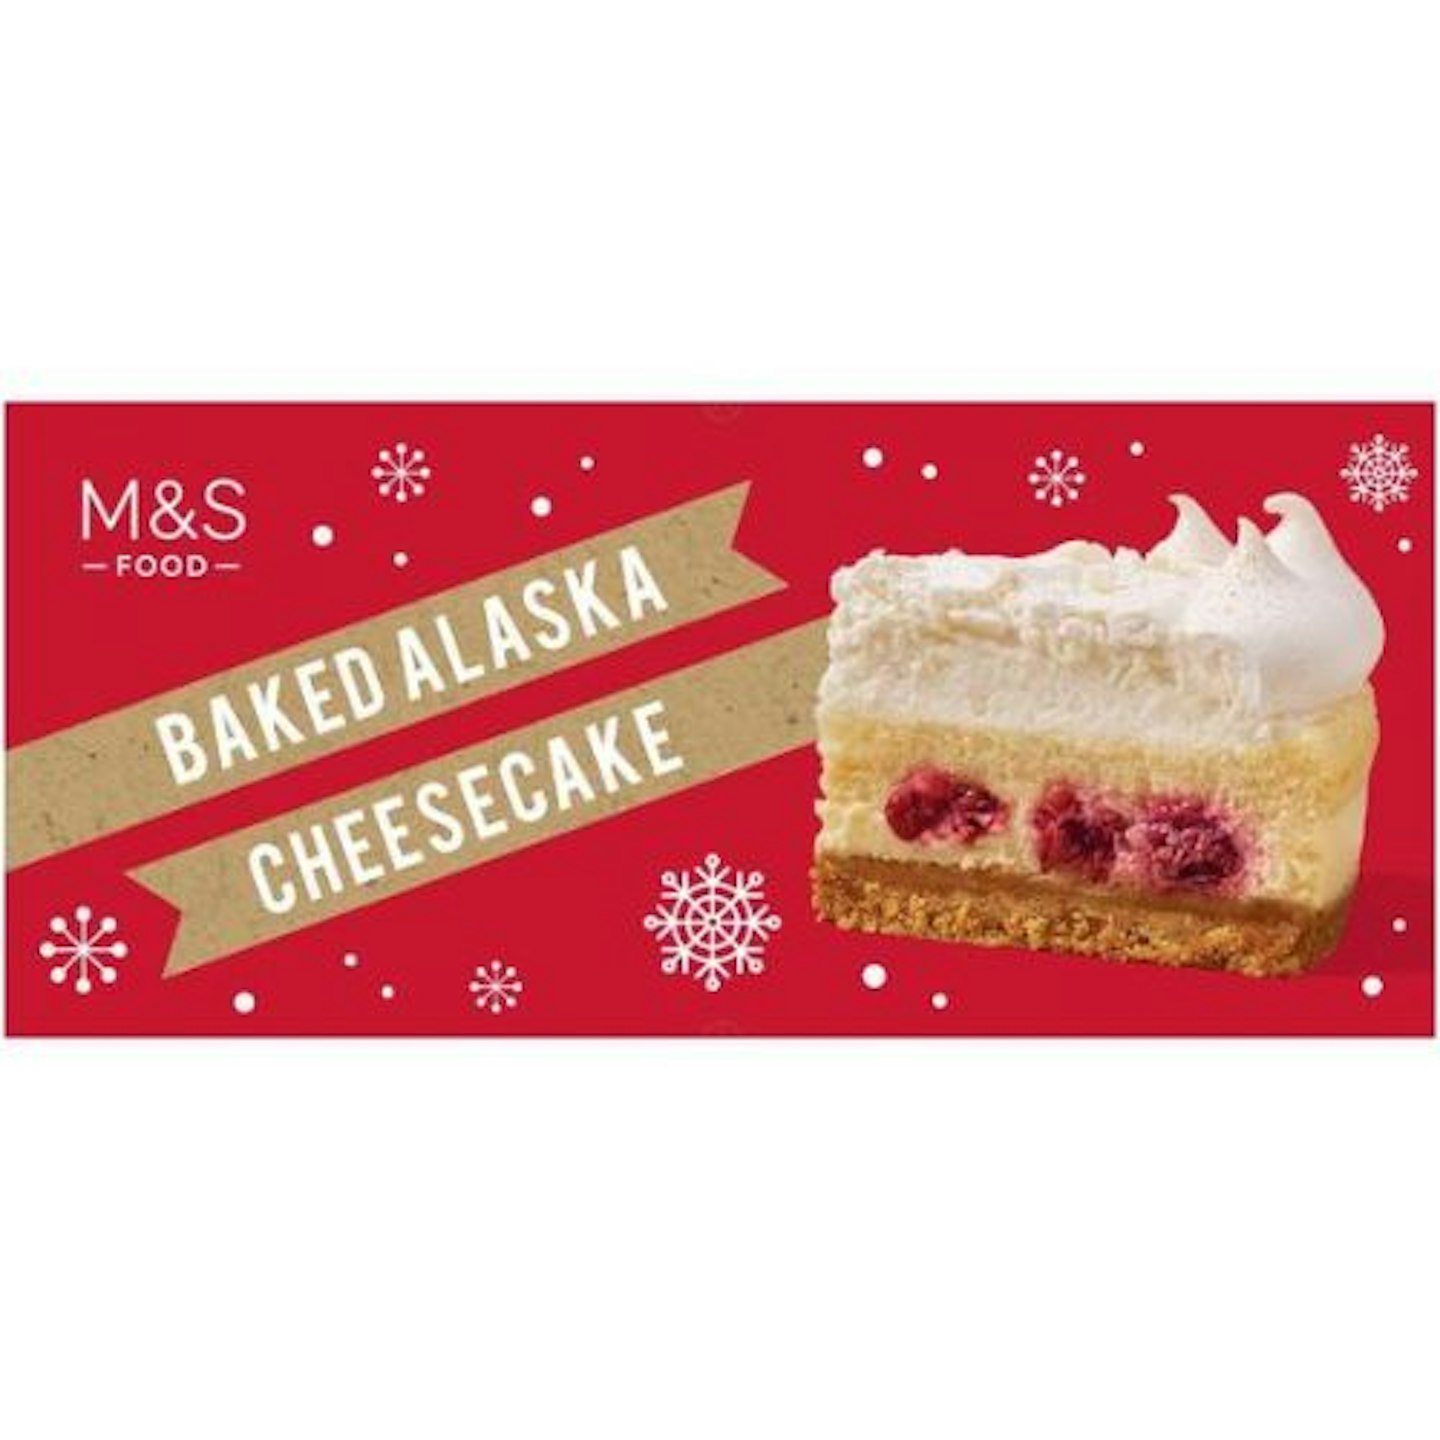 M&S Baked Alaska Cheesecake